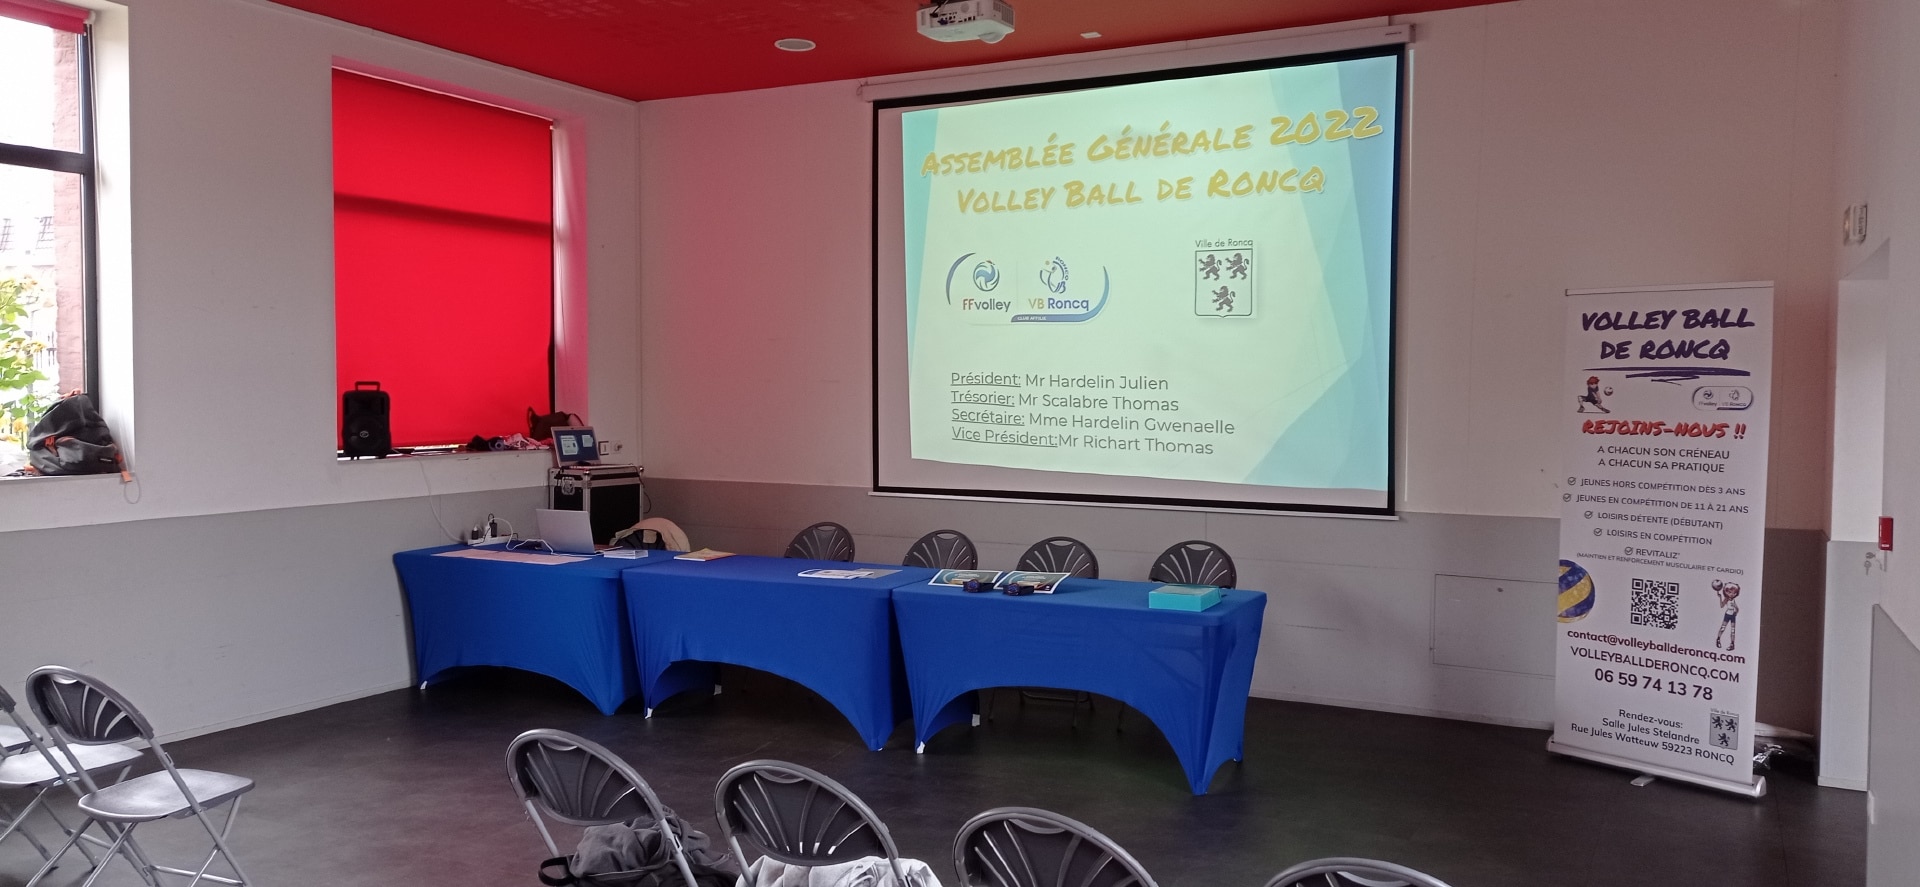 assemblee-generale-2022-volley-ball-de-roncq-2